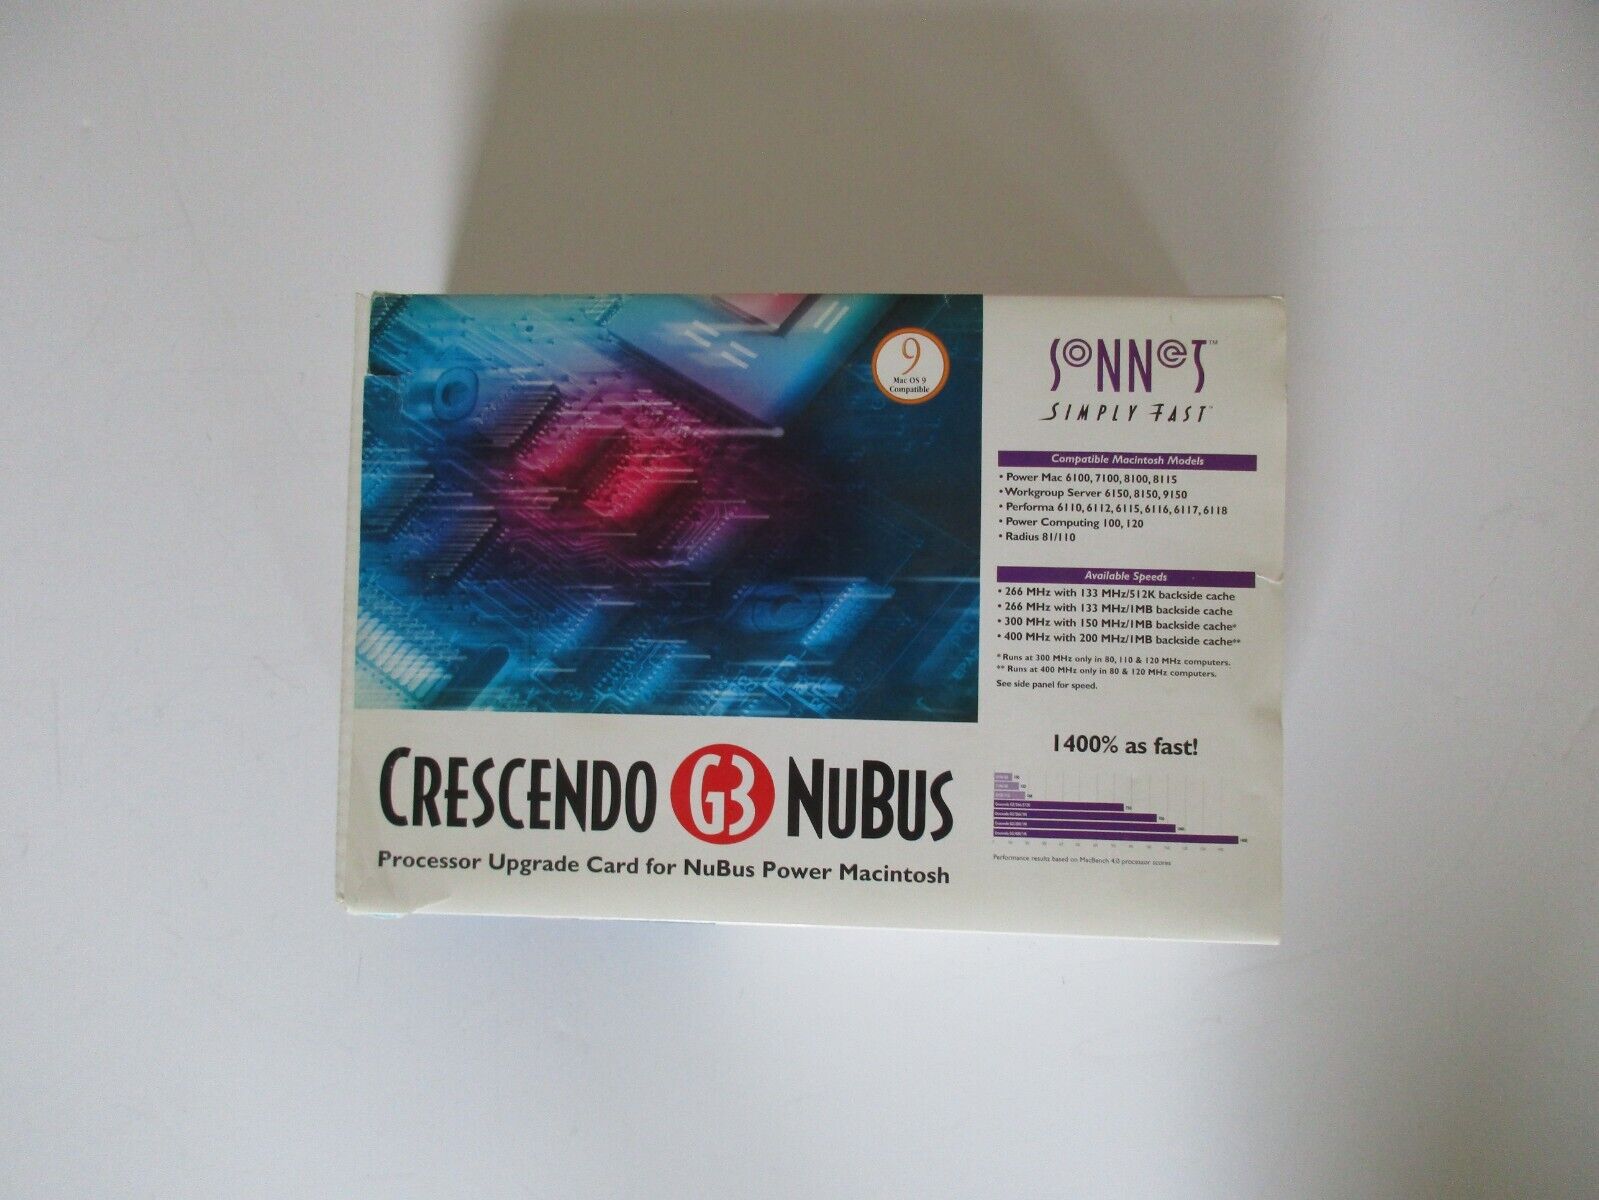 Vintage Crescendo G3 Nubus Processor Upgrade Card  for Nubus Power Macintosh